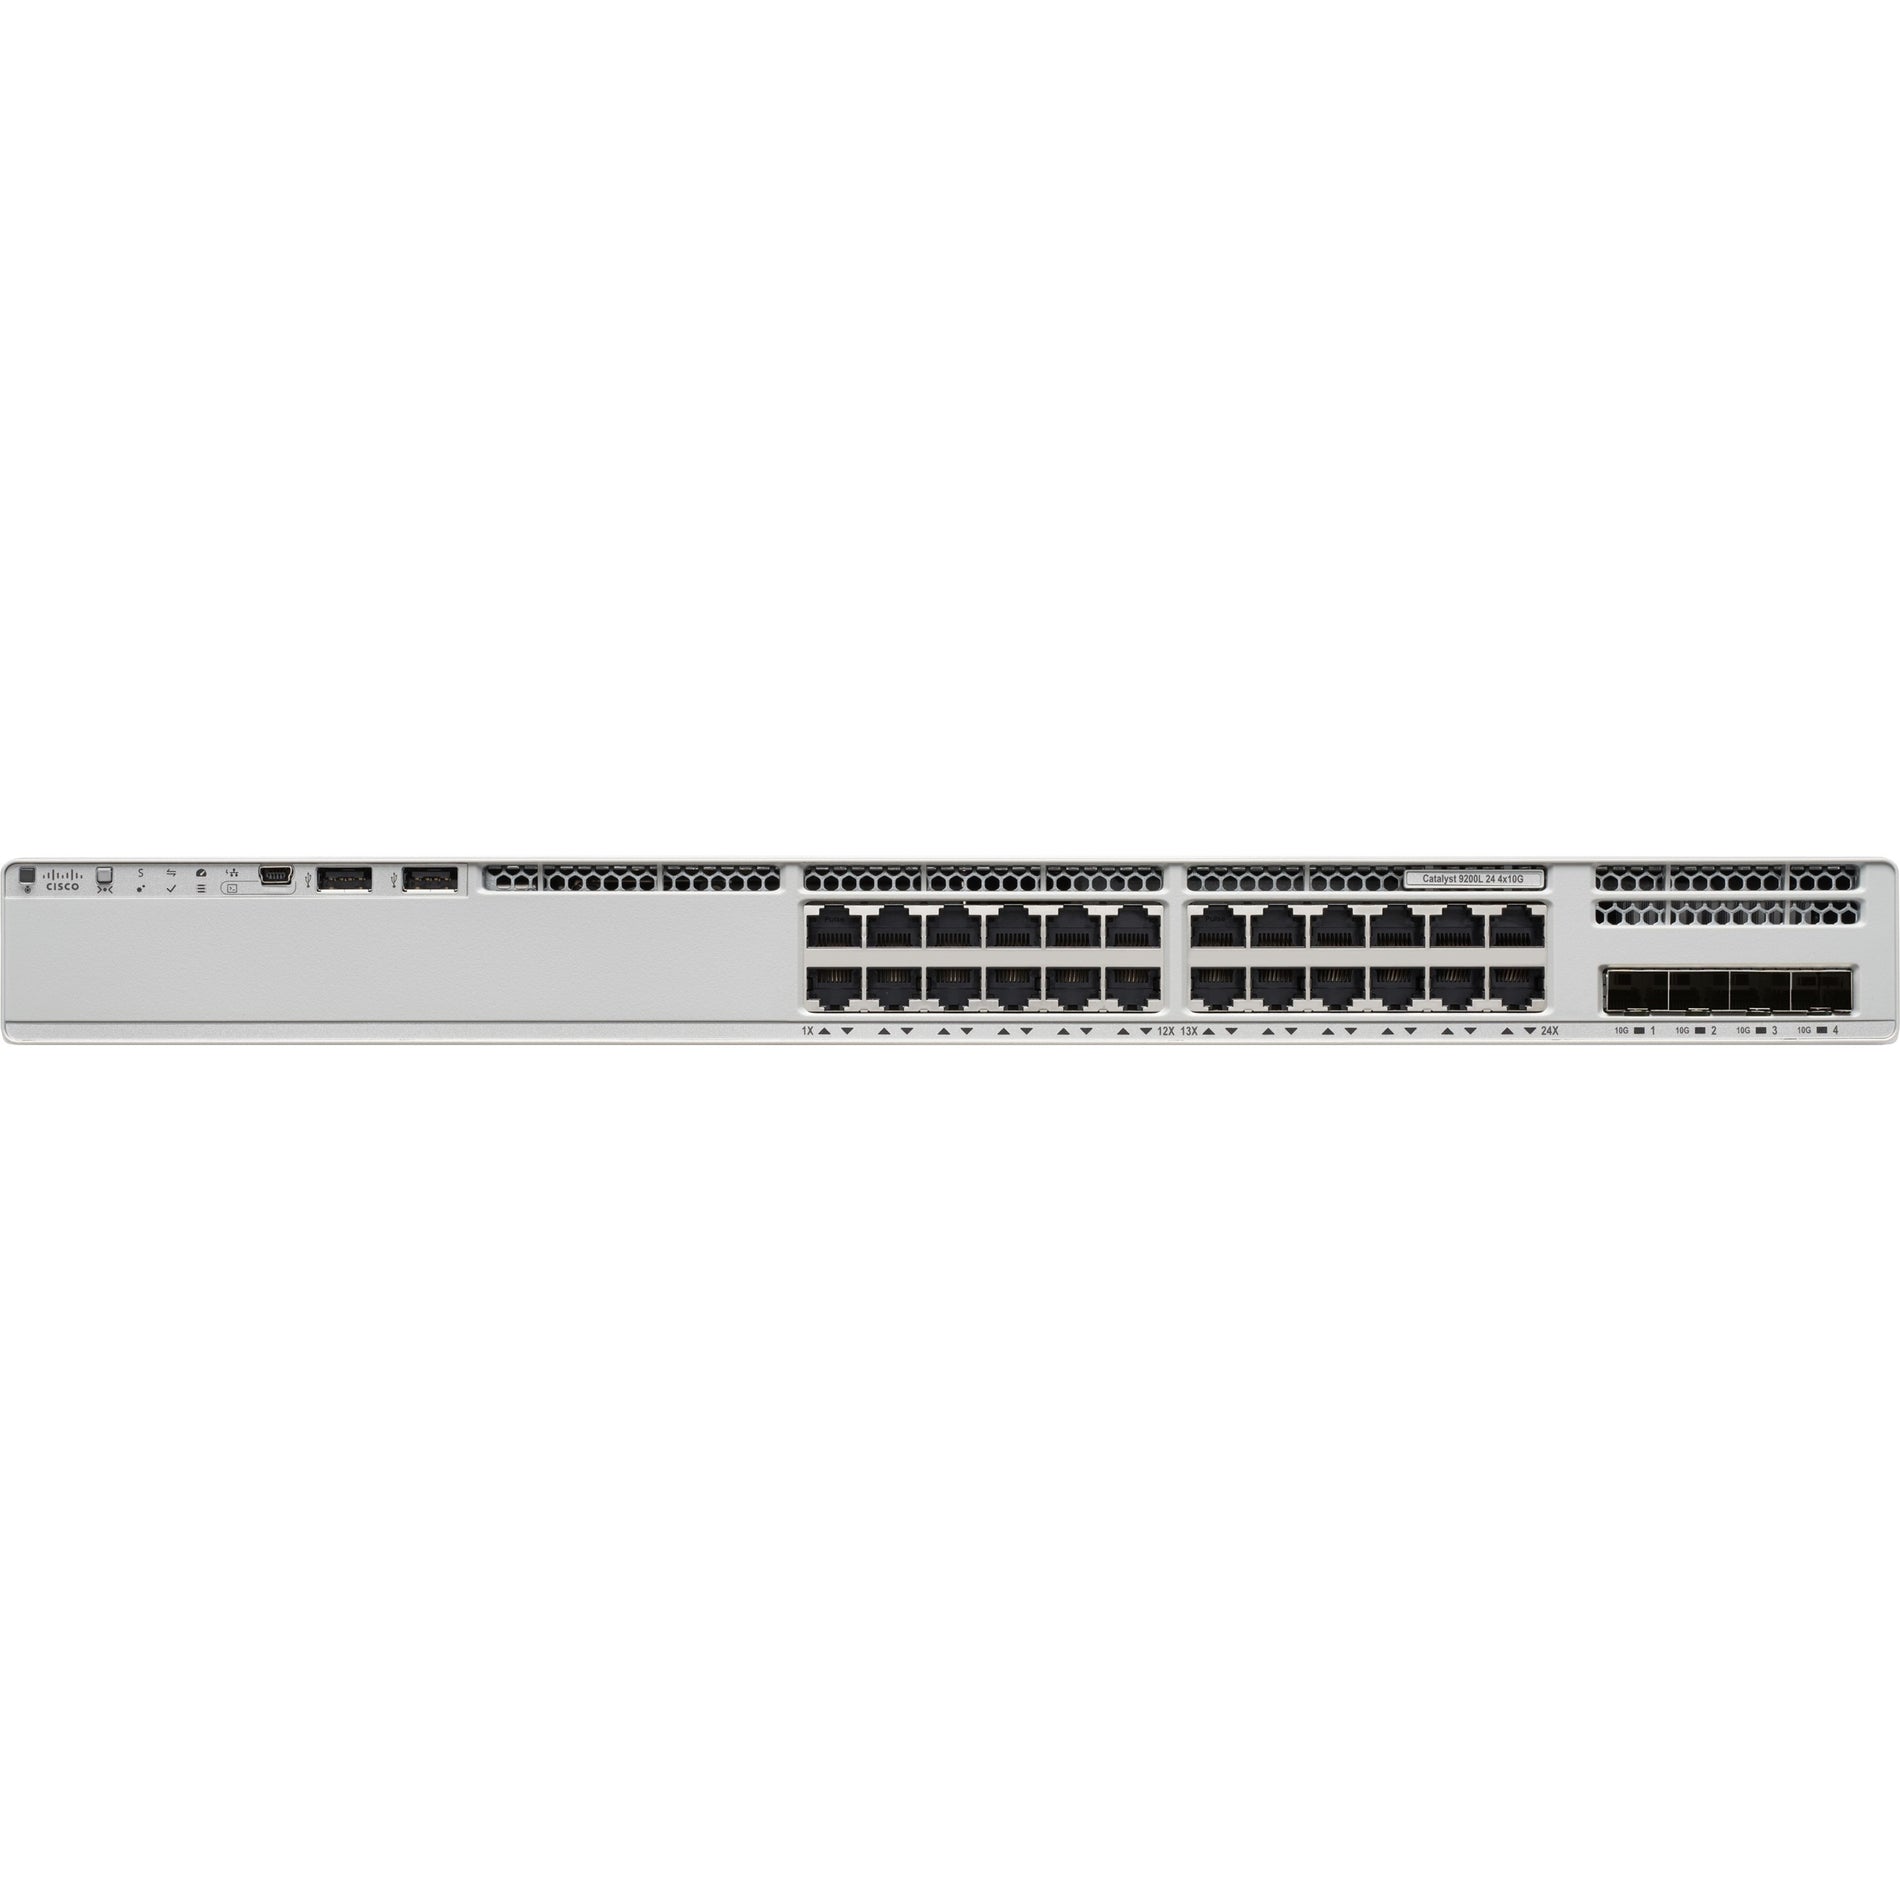 Cisco Catalyst 9200 C9200L-24T-4X Layer 3 Switch (C9200L-24T-4X-A)